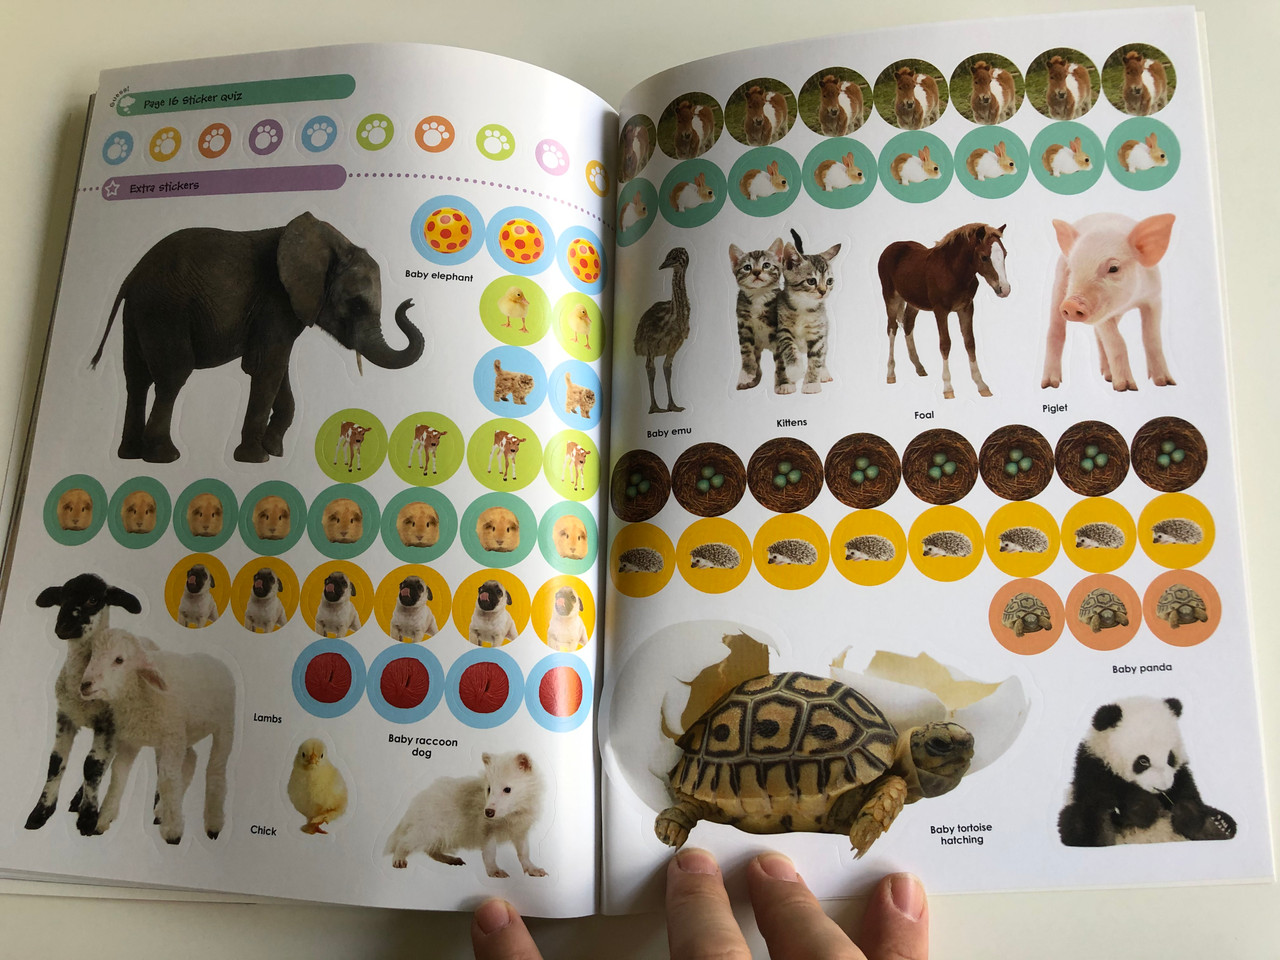 Eyelike Reusable Sticker Book (Multiple Themes)